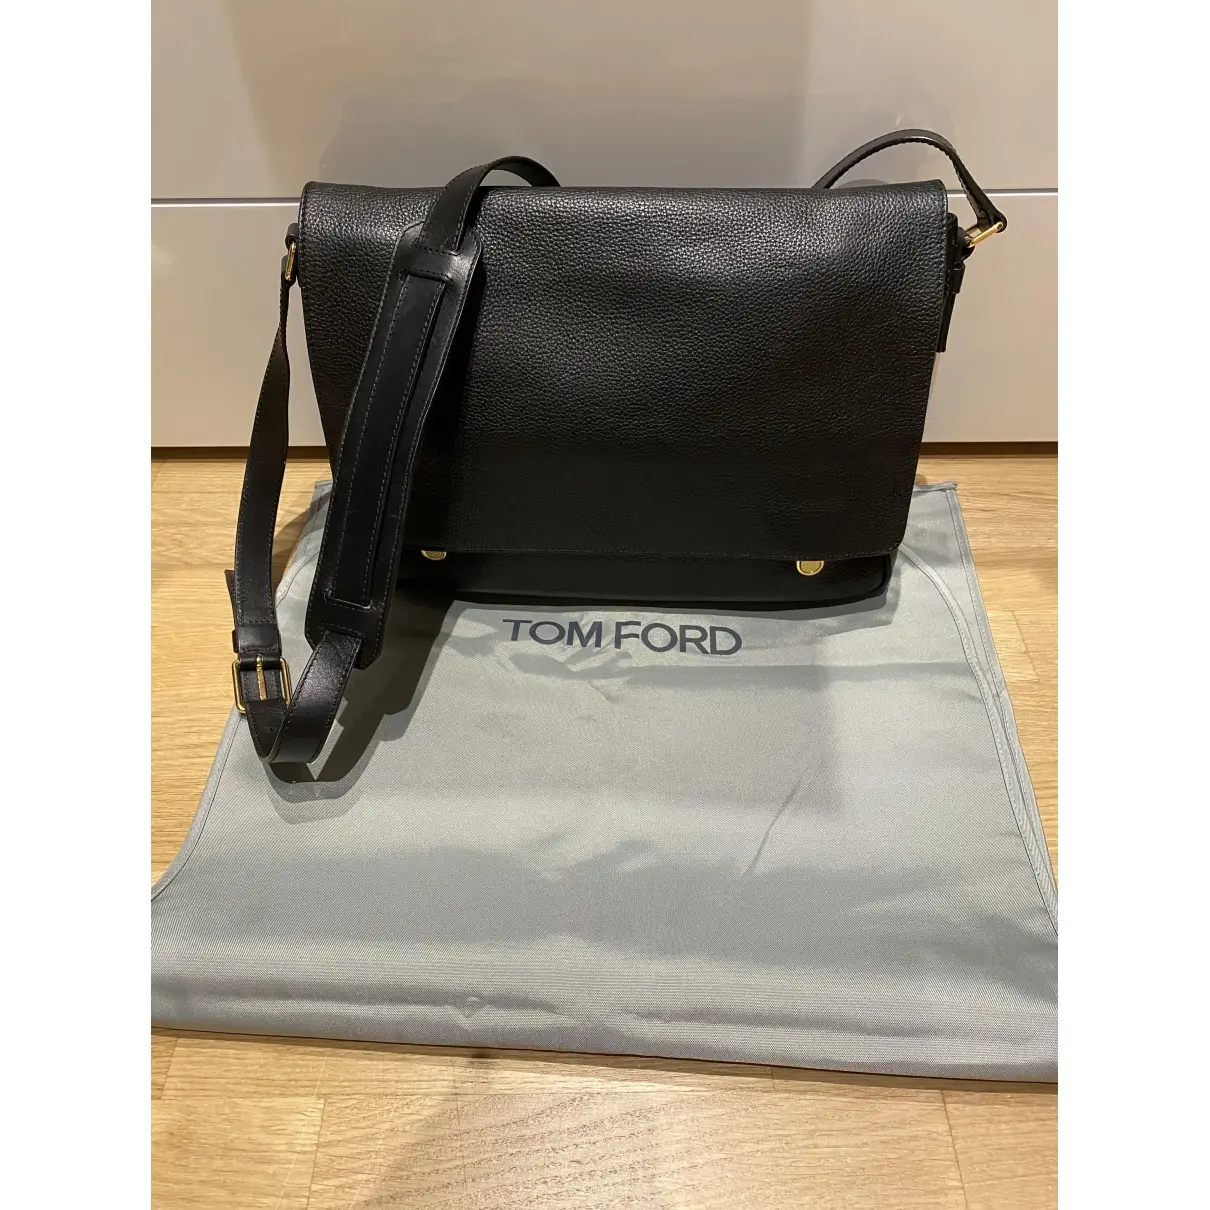 Buy Tom Ford Leather satchel online